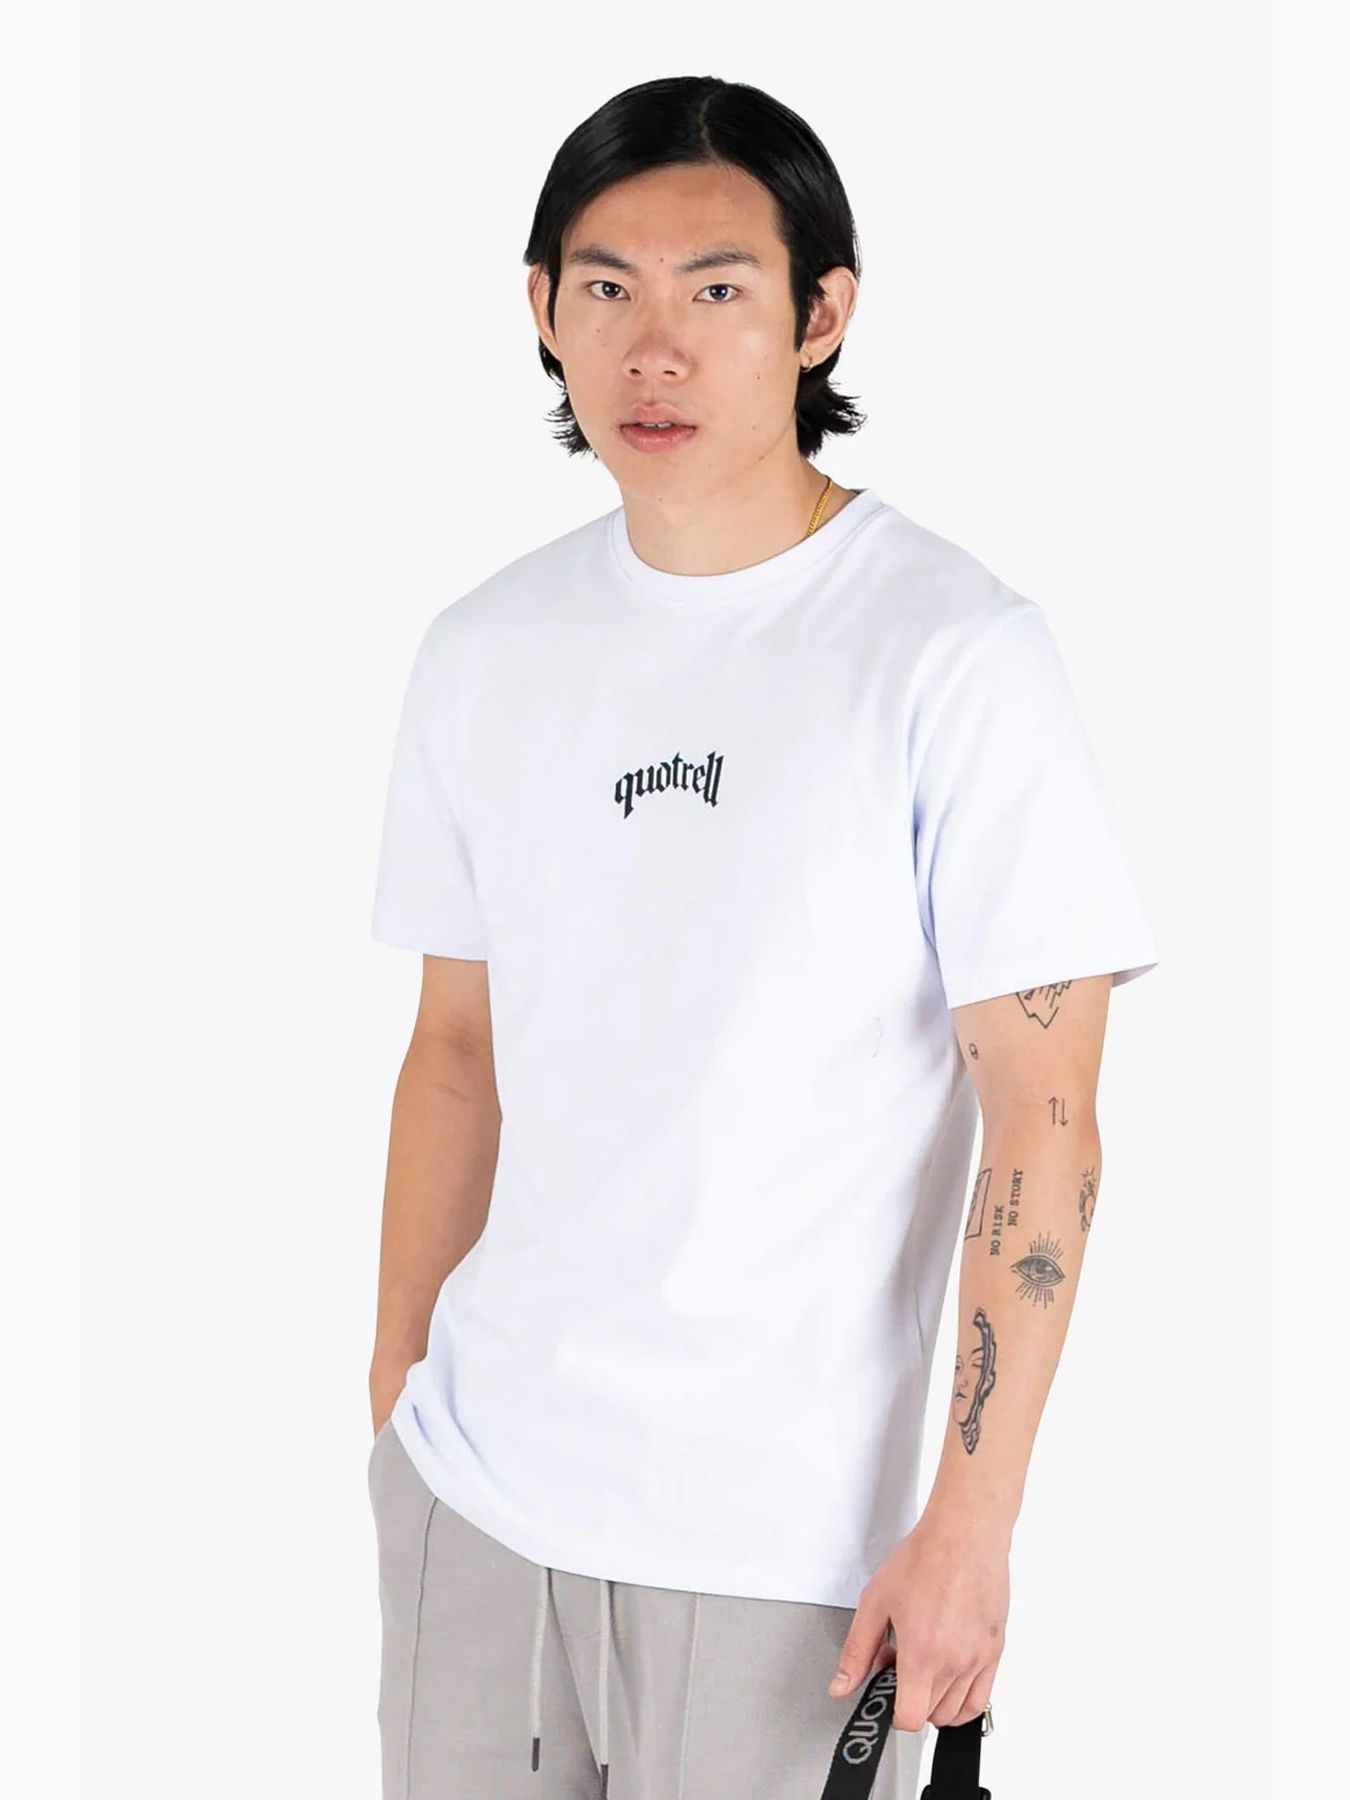 Quotrell Global unity t-shirt White/black 00108207-102